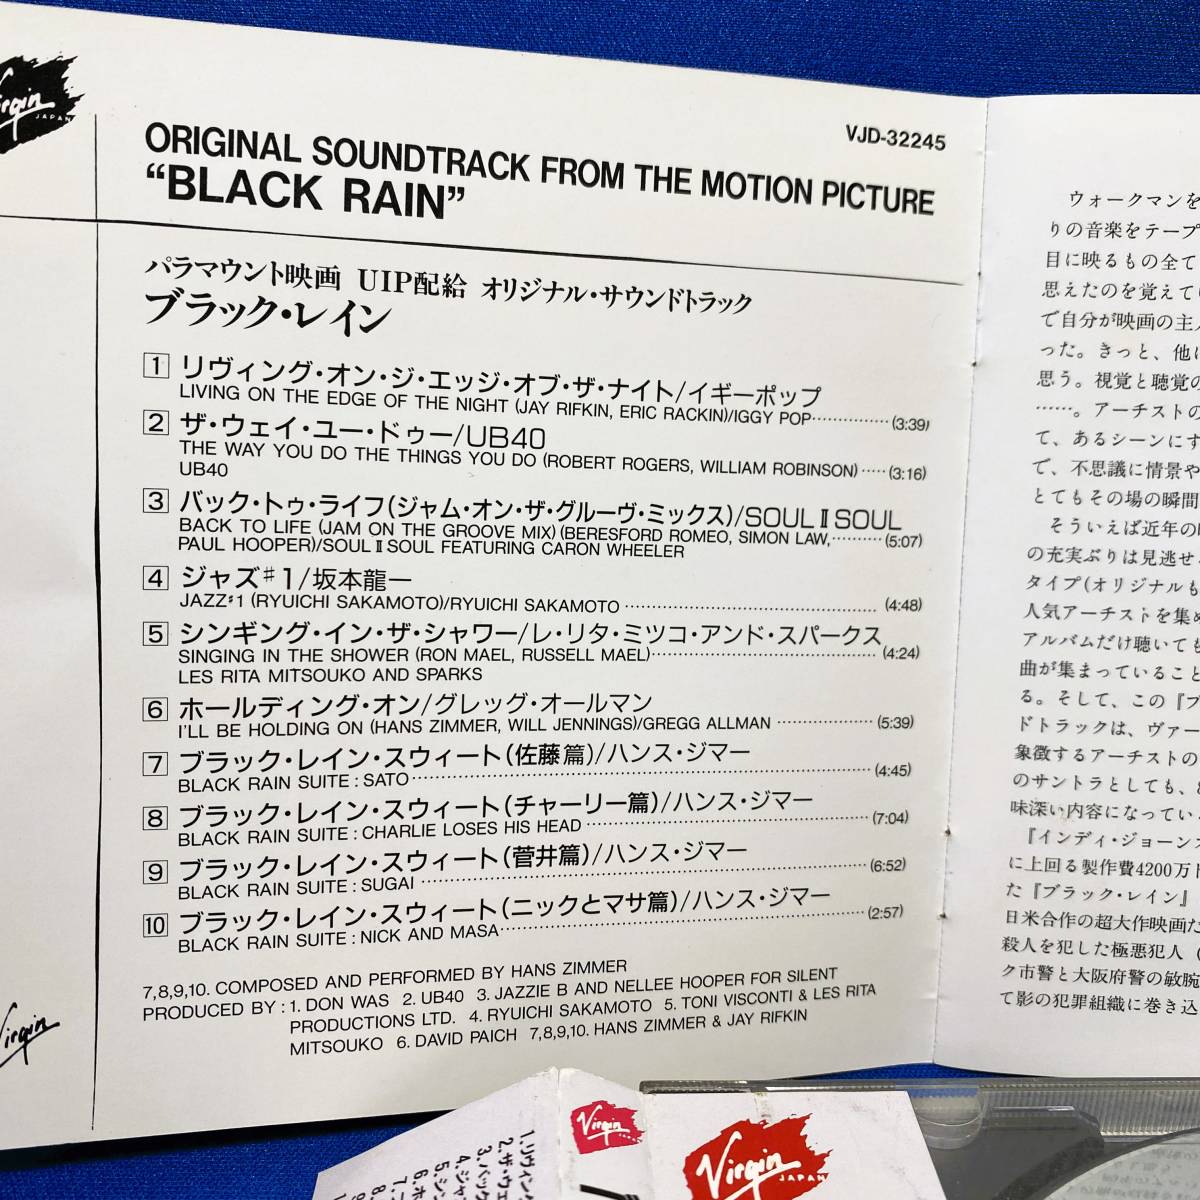  черный * дождь BLACK RAIN / оригинал * саундтрек / Sakamoto Ryuichi igi-* pop рукоятка s*jima- др. / образец запись промо / VJD-32245